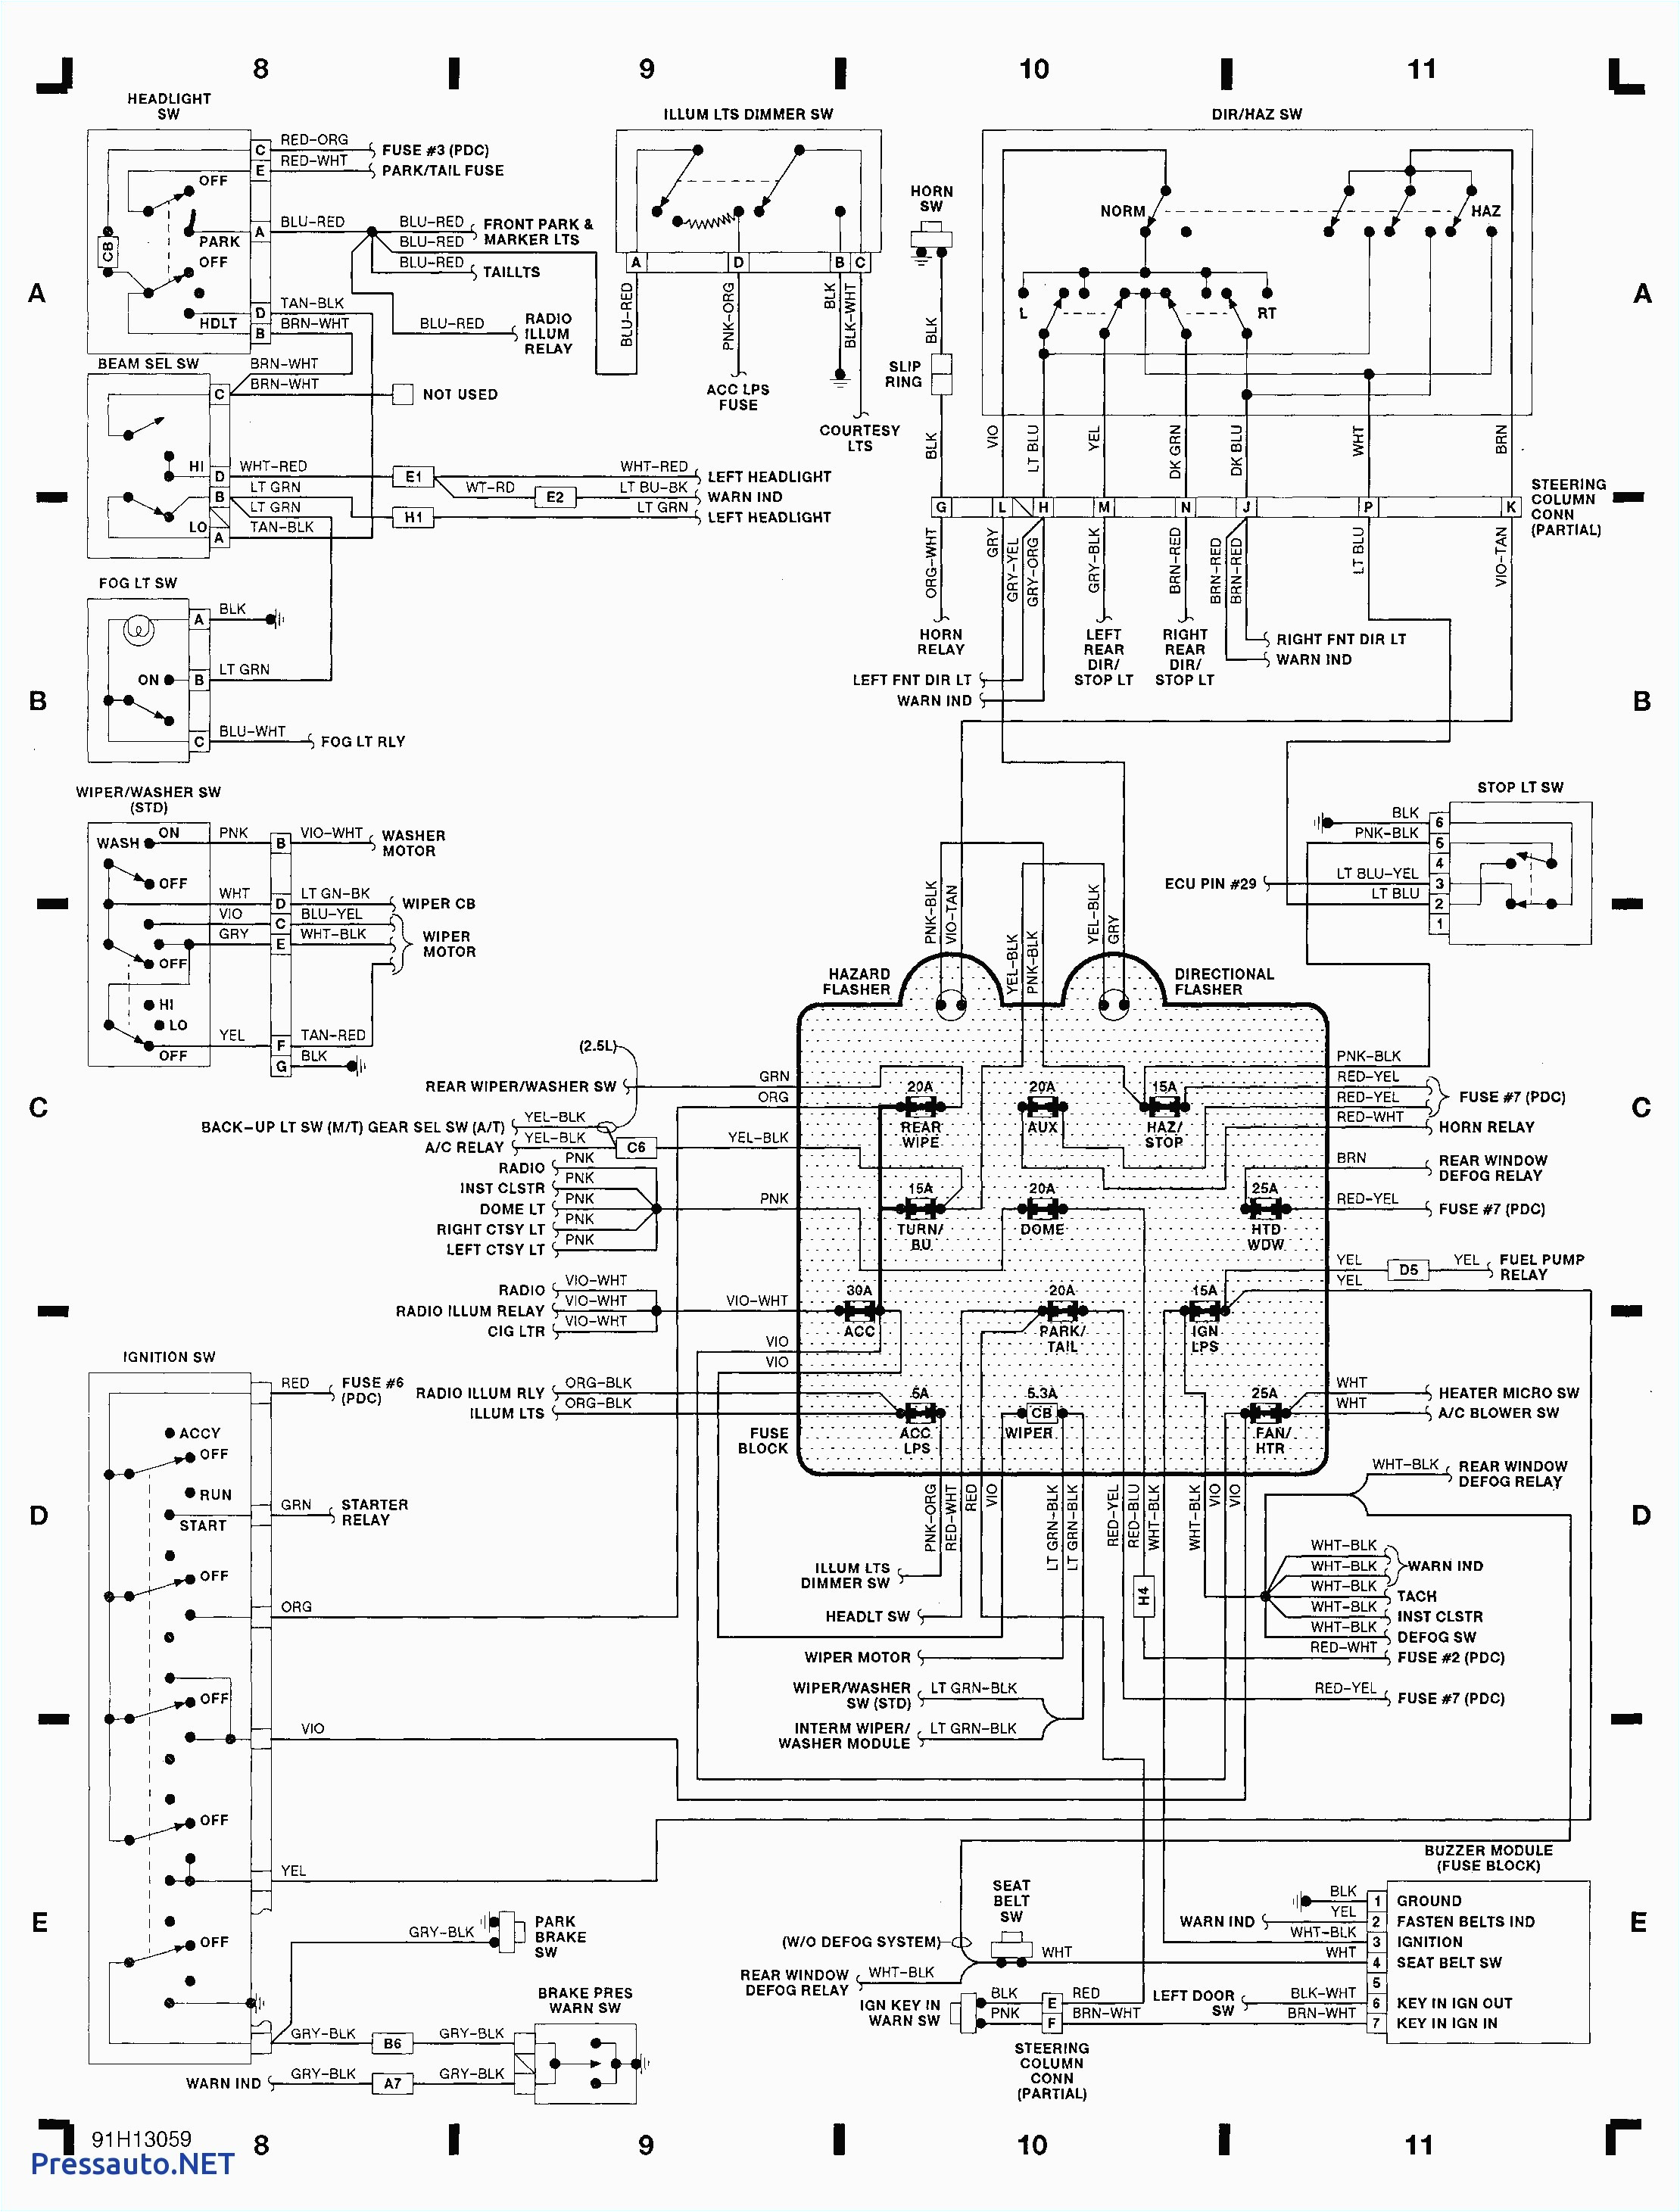 1996 jeep cherokee turn signal wiring diagram wiring diagram user 2004 jeep grand cherokee turn signal wiring diagram